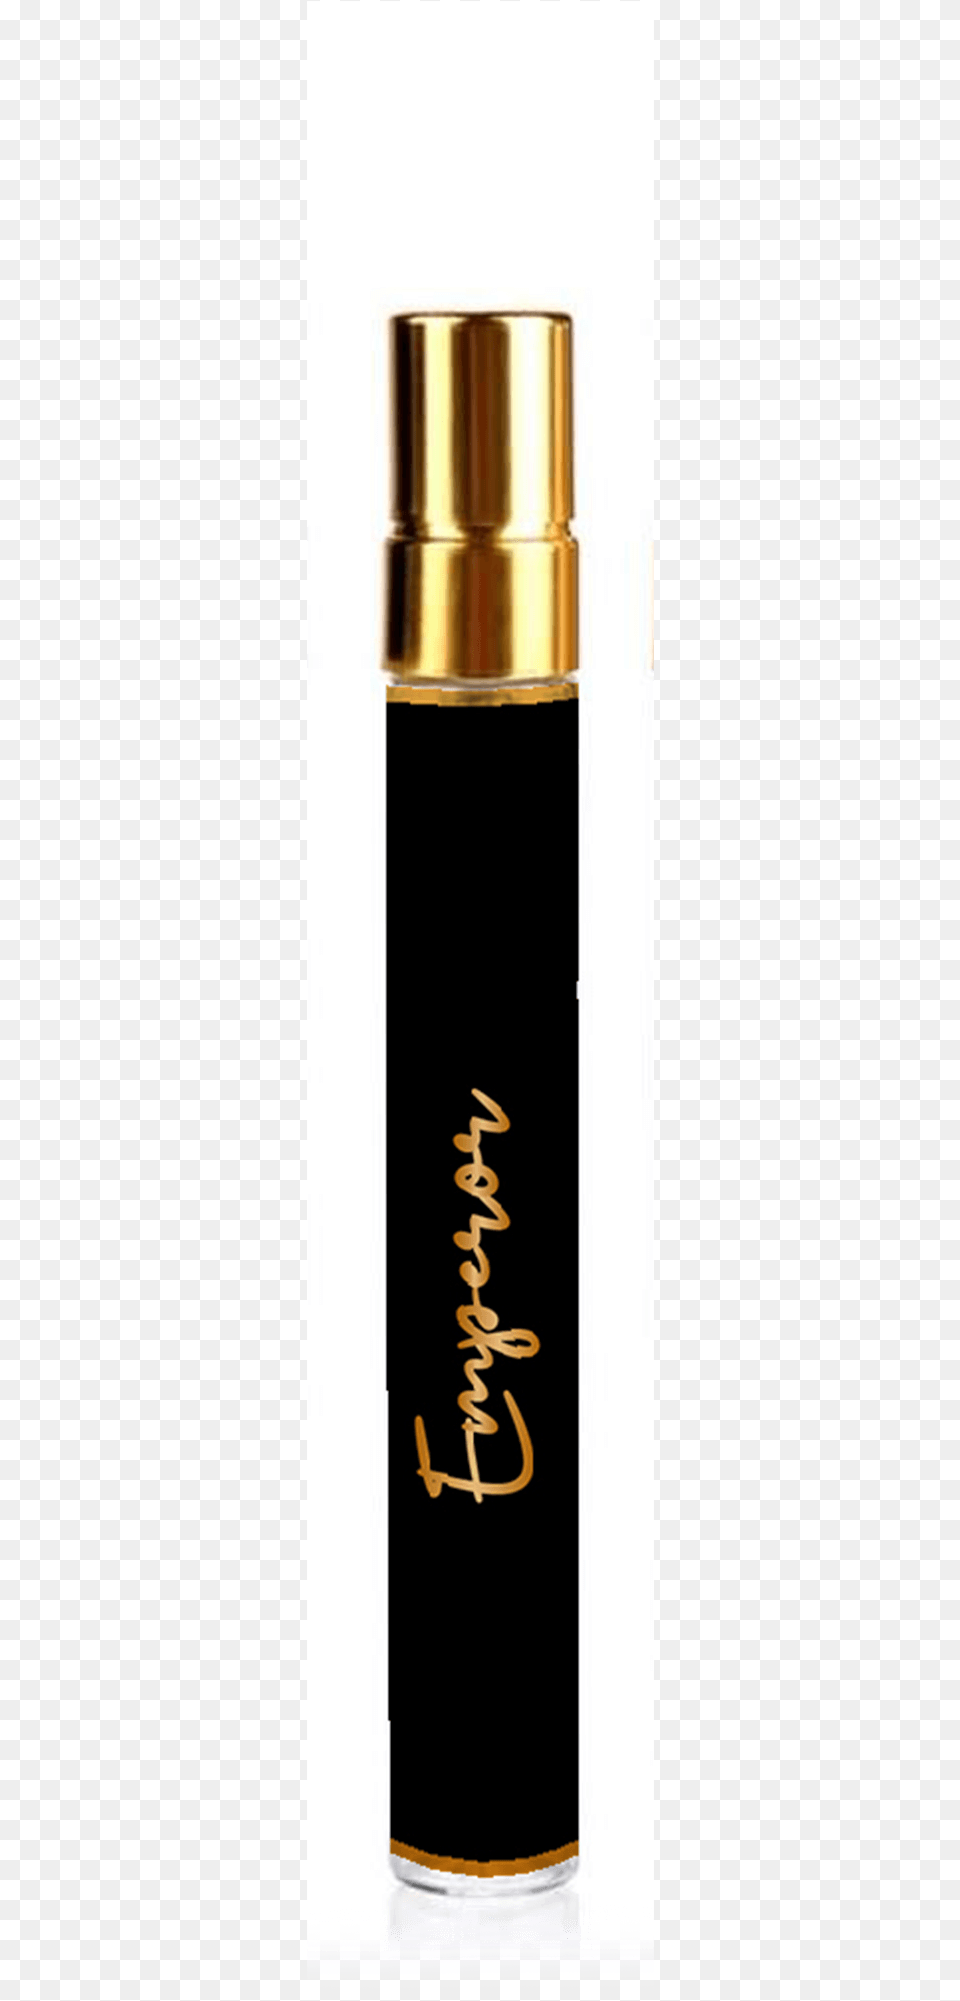 Emperor 10ml Perfume, Bottle, Cosmetics Png Image